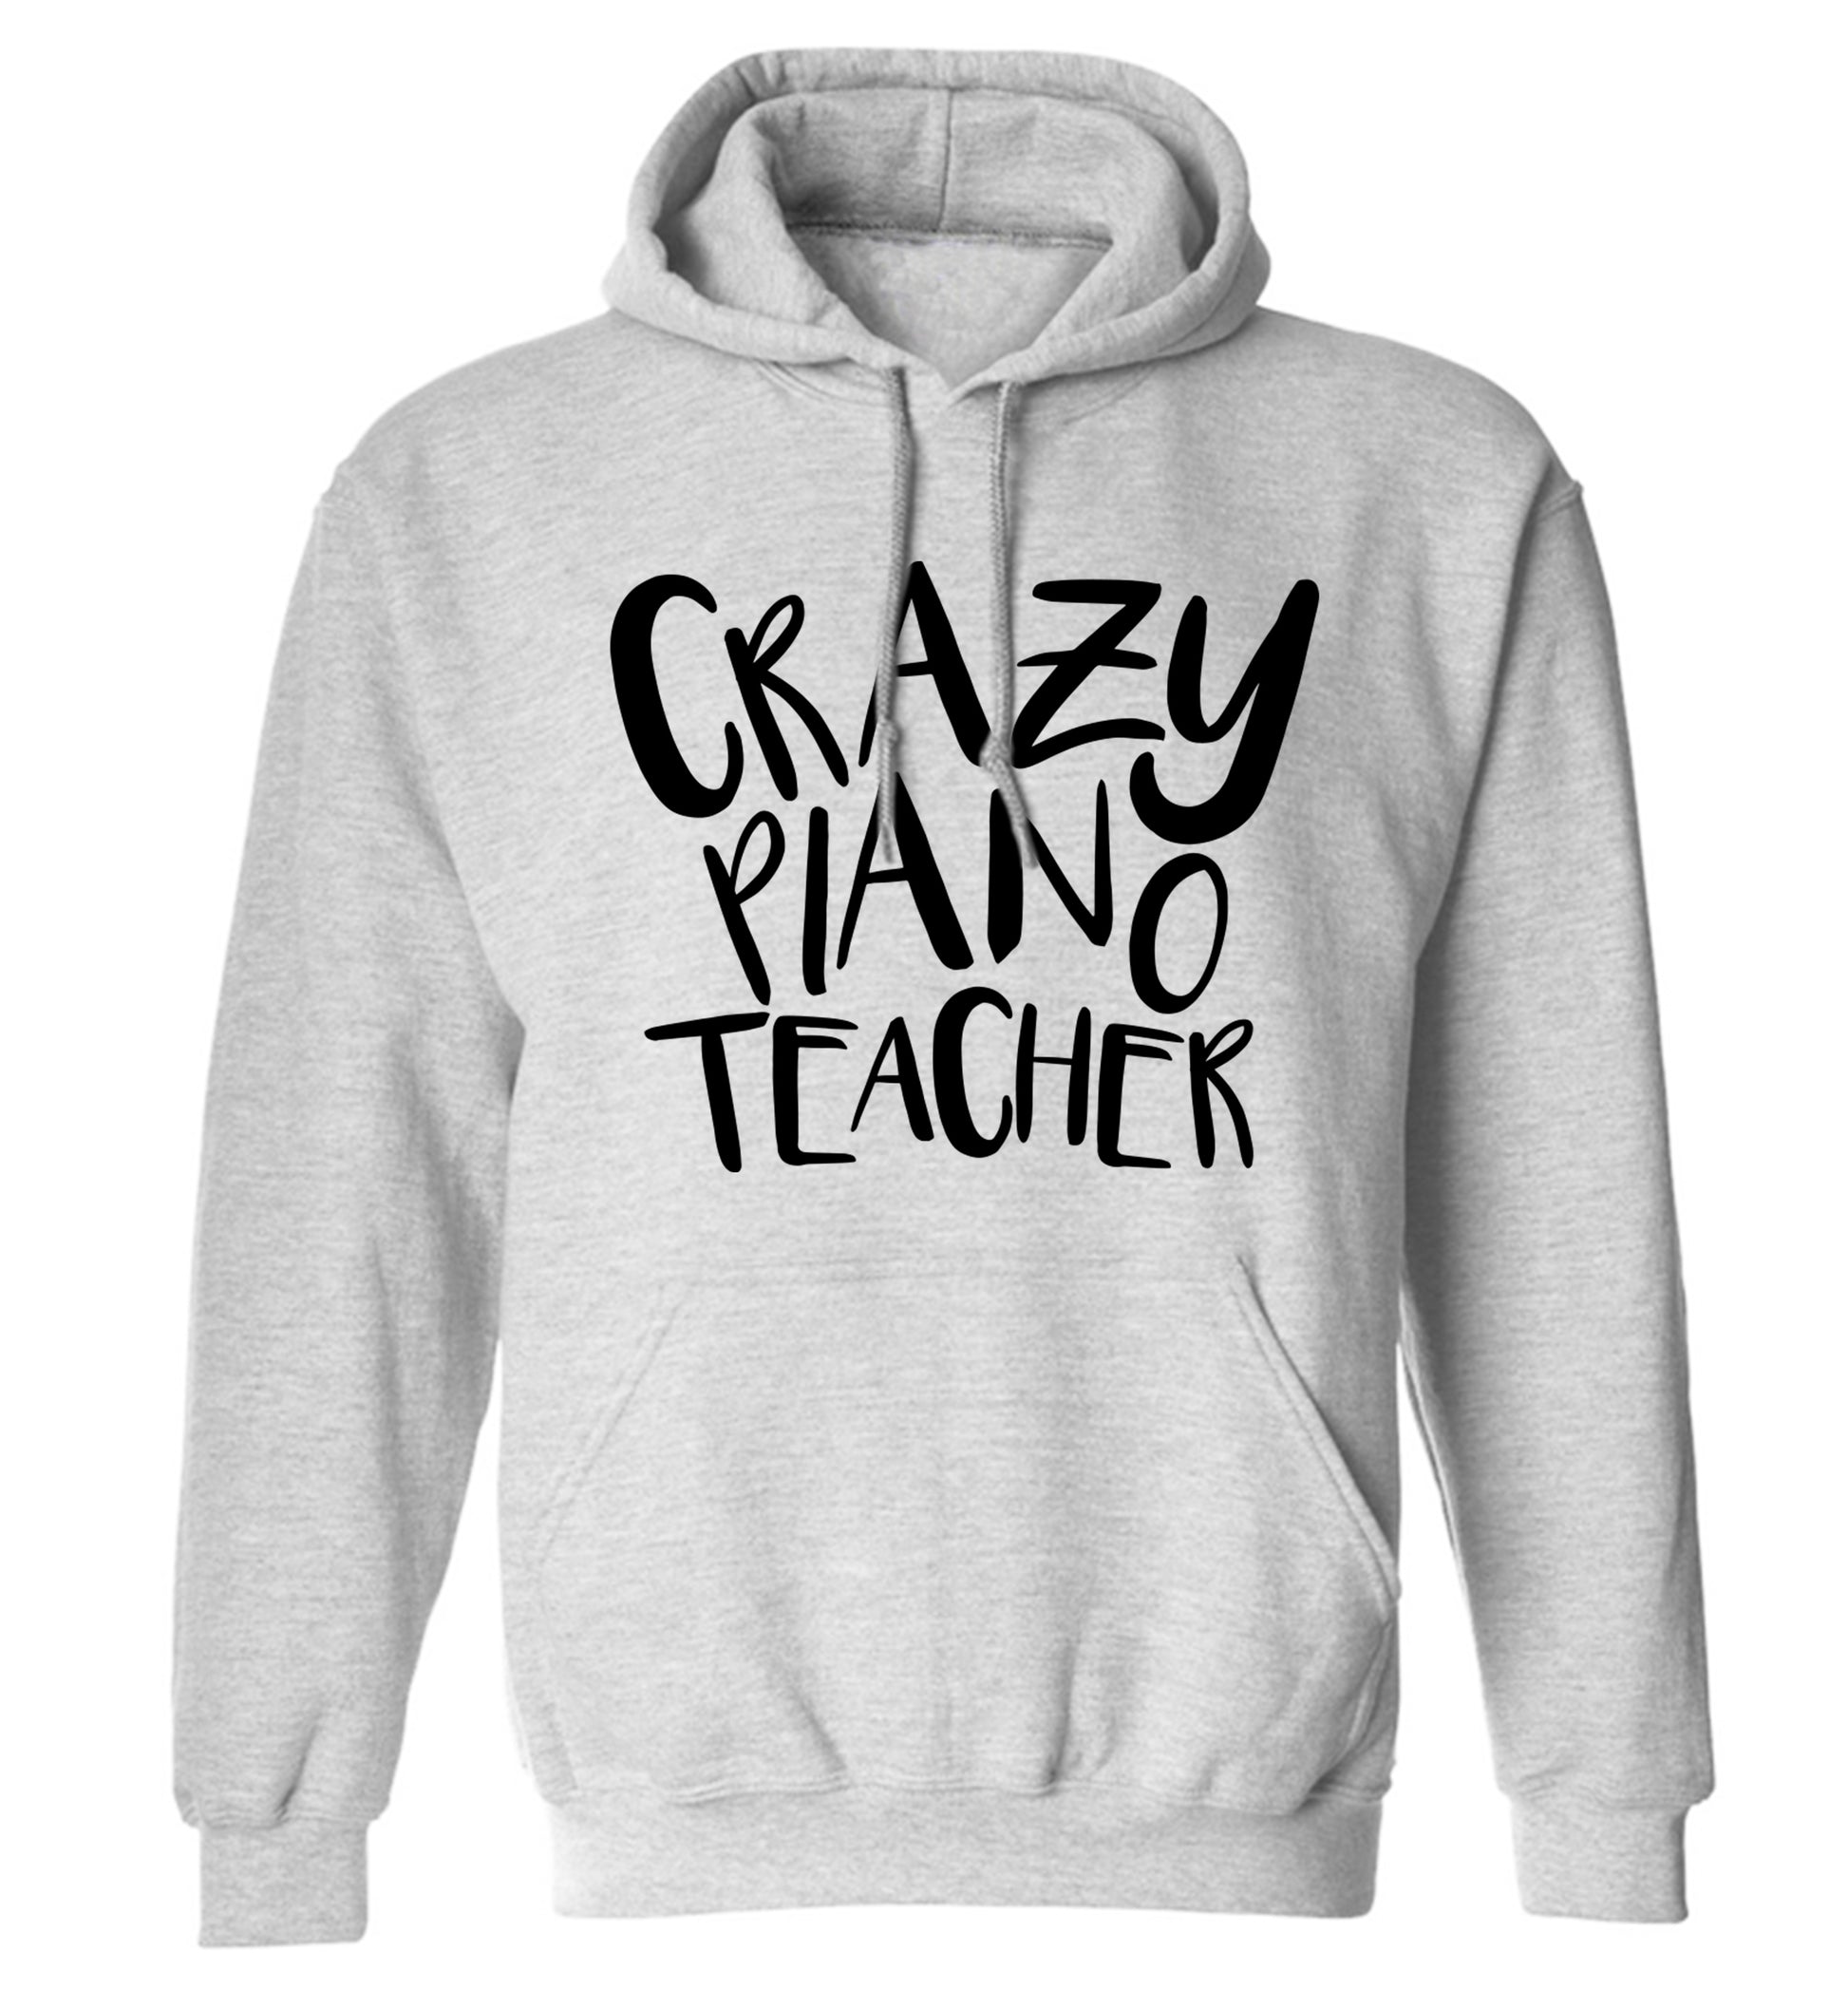 Crazy piano teacher adults unisex grey hoodie 2XL